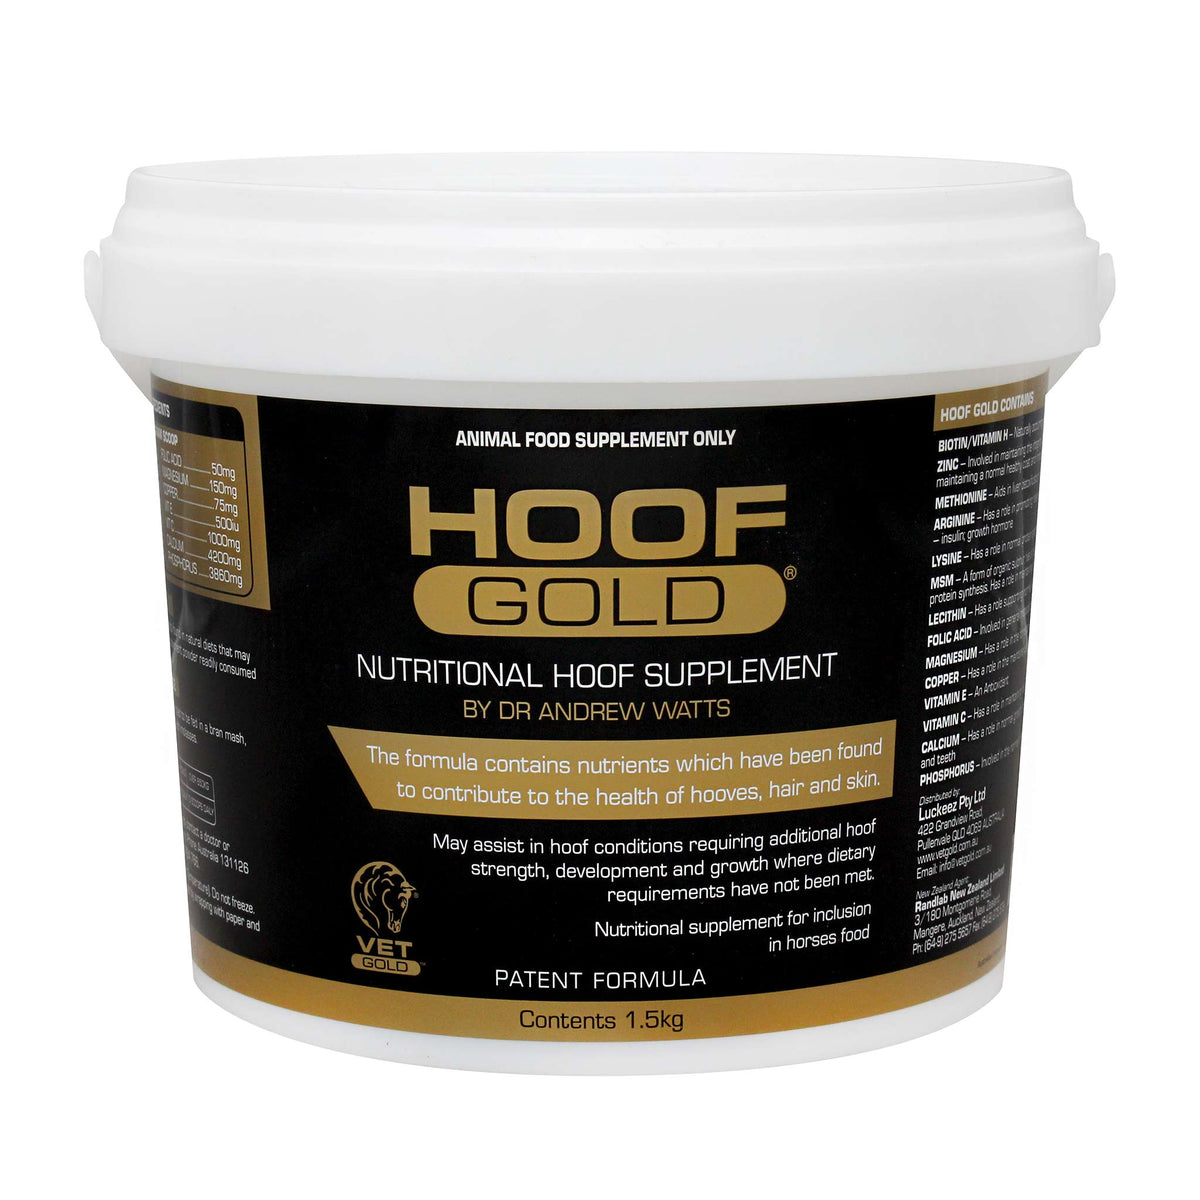 Hoof Gold - Nutritional Hoof Supplement for Horses